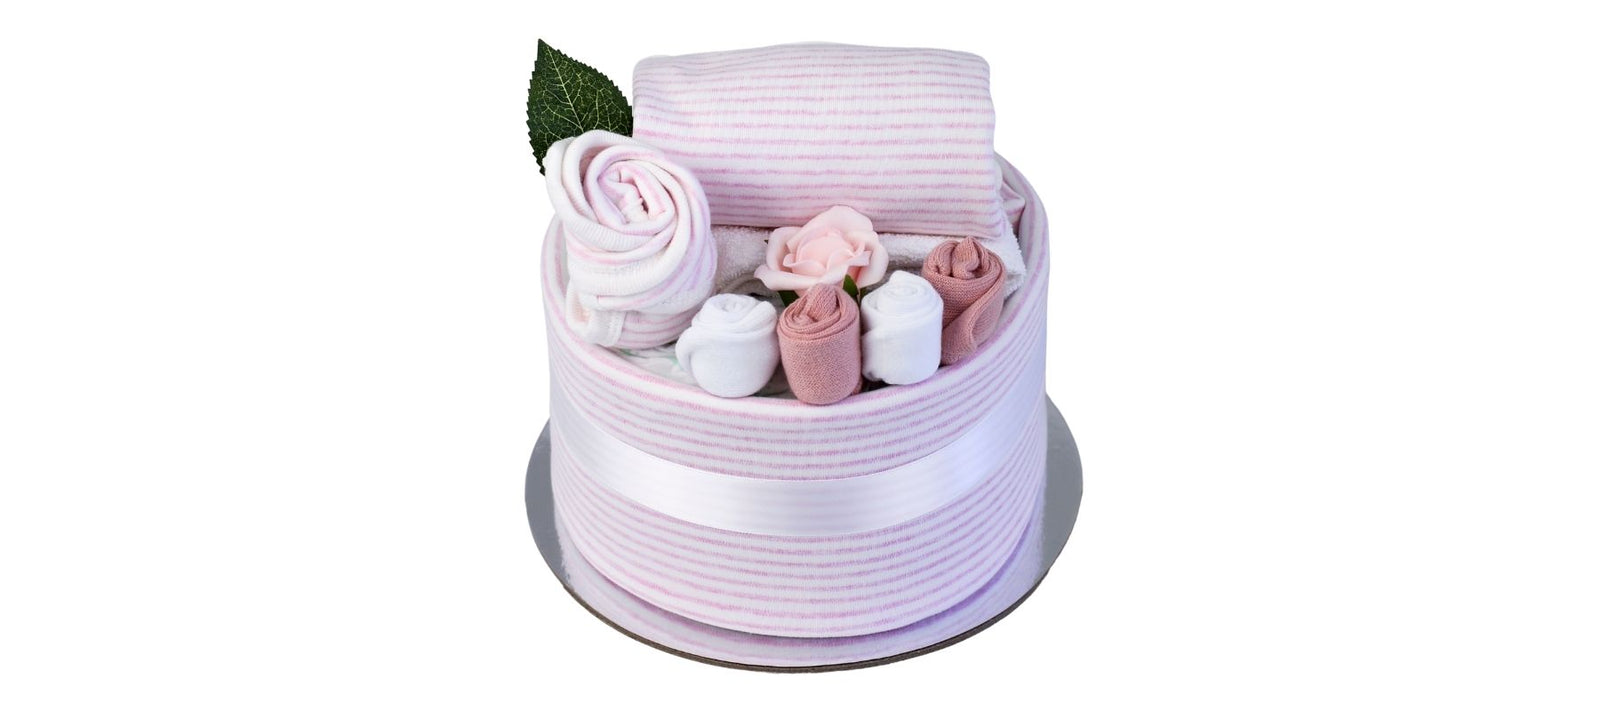 Nappy cake design ideas for girls